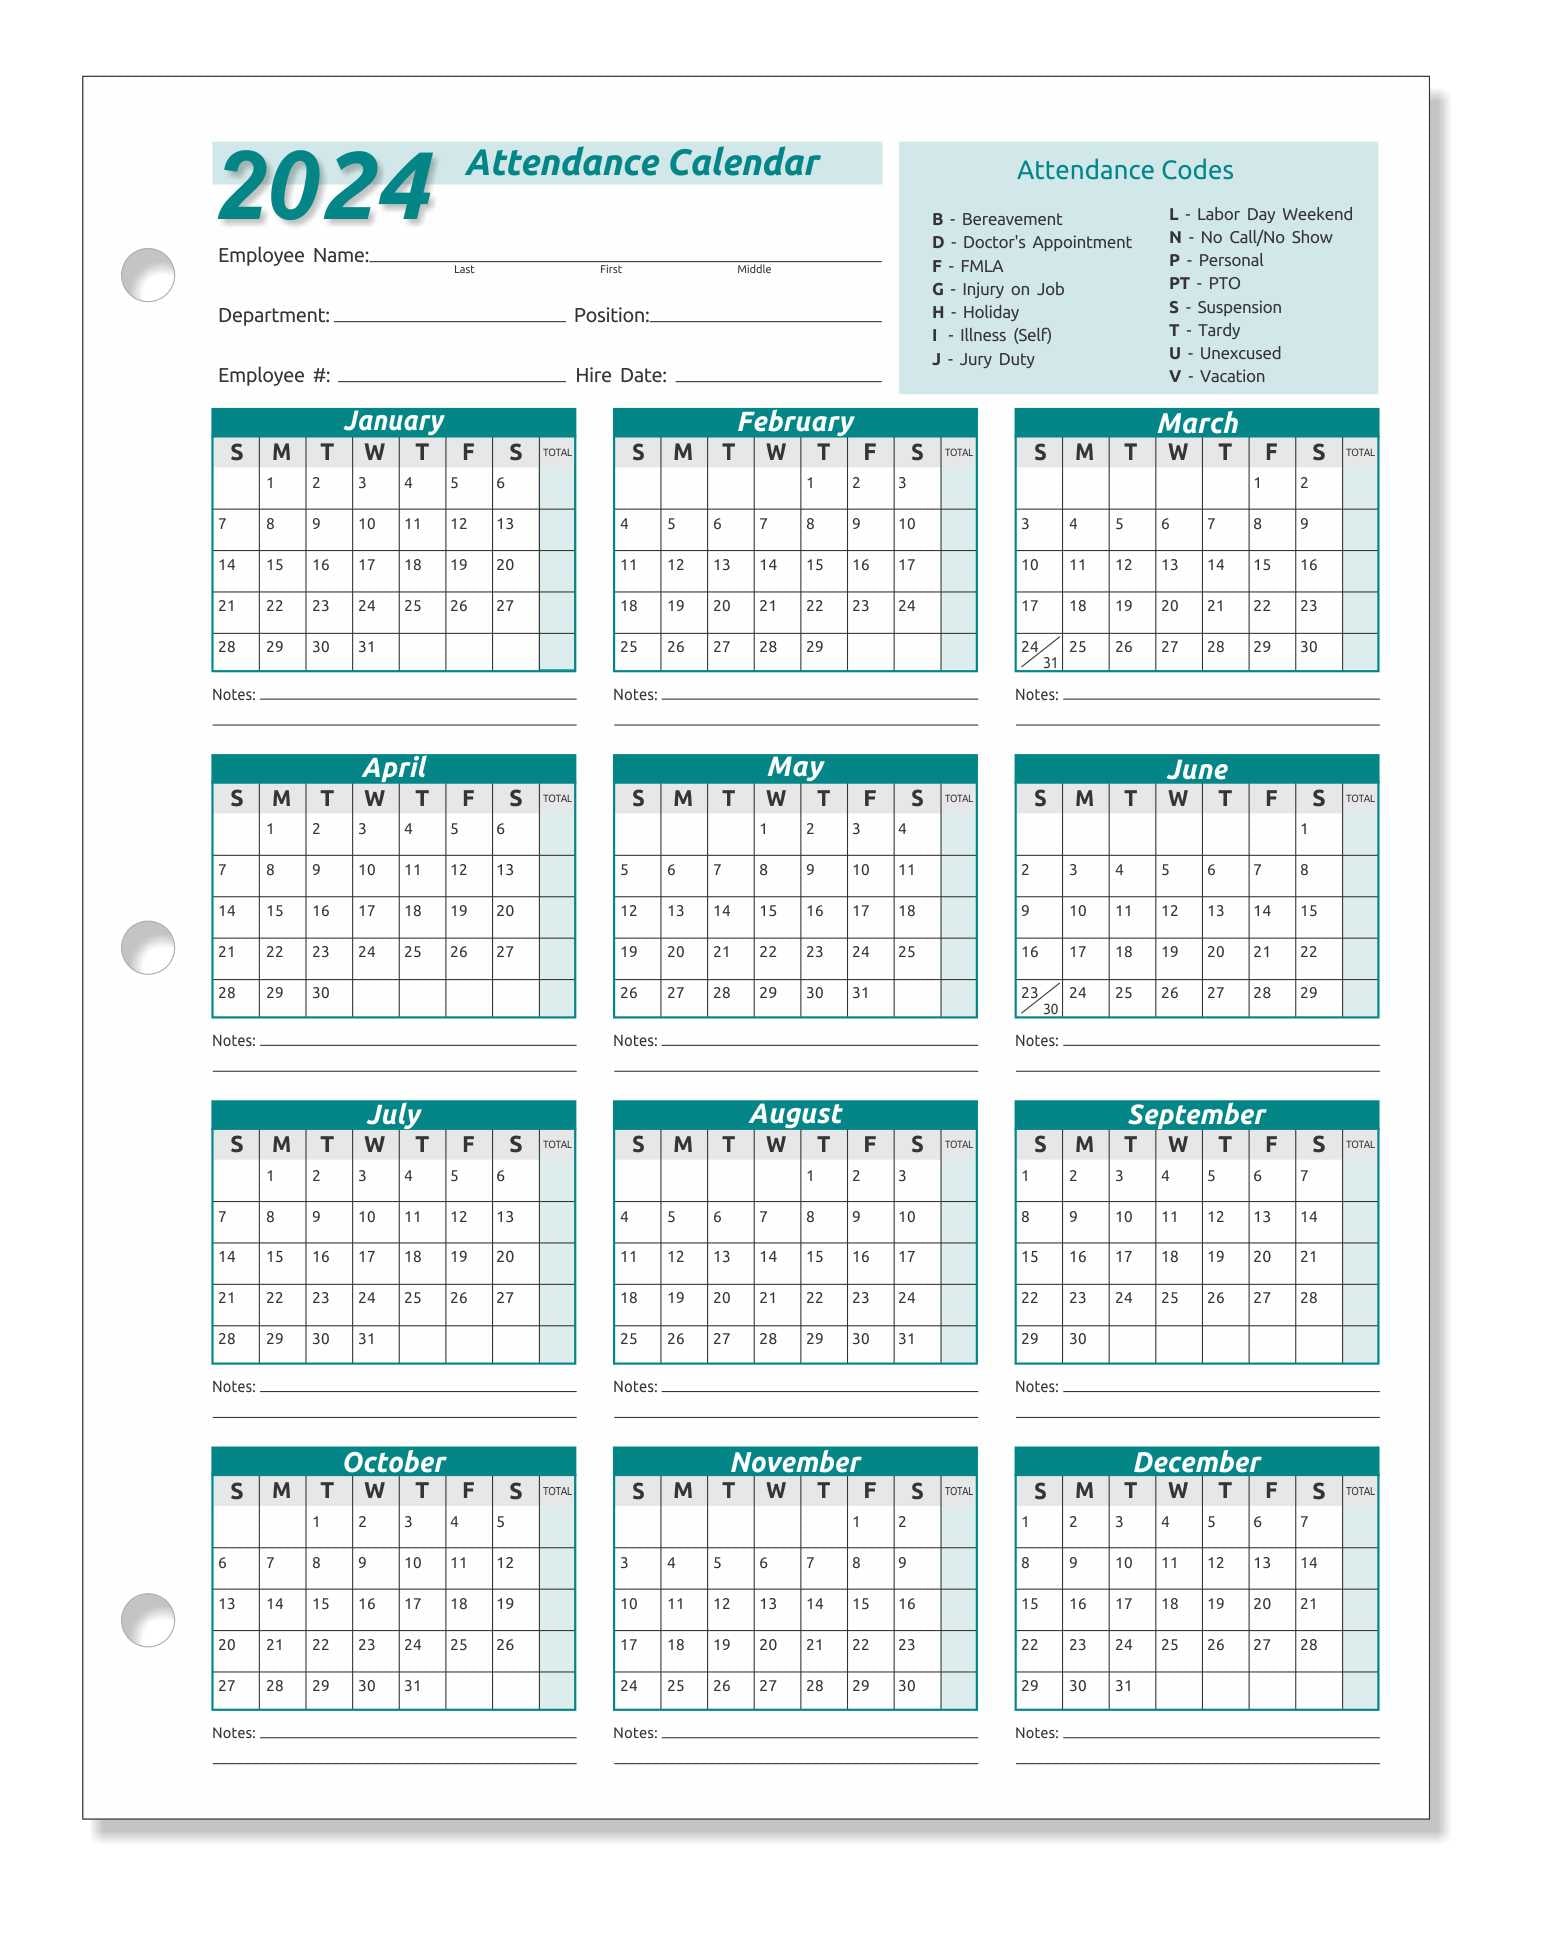 NEXT YEAR - Work Tracker Attendance Calendar Cards- 8 ½ X 11 Cardstock / Pack of 25 Sheets (2024)